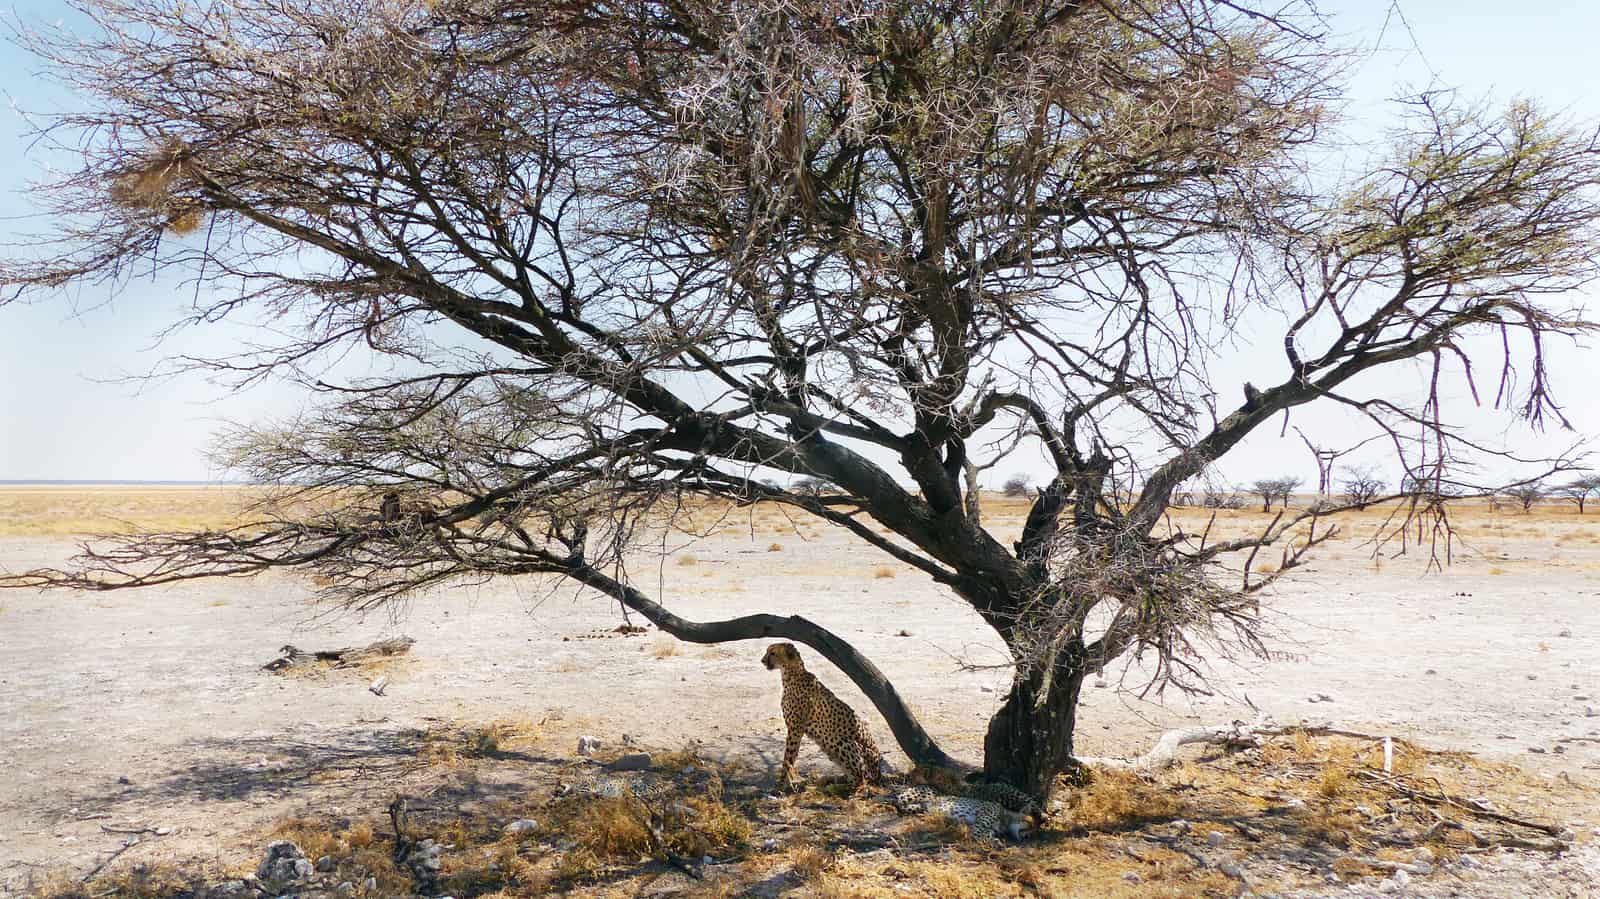 Cheetahs at Etosha, Namibia